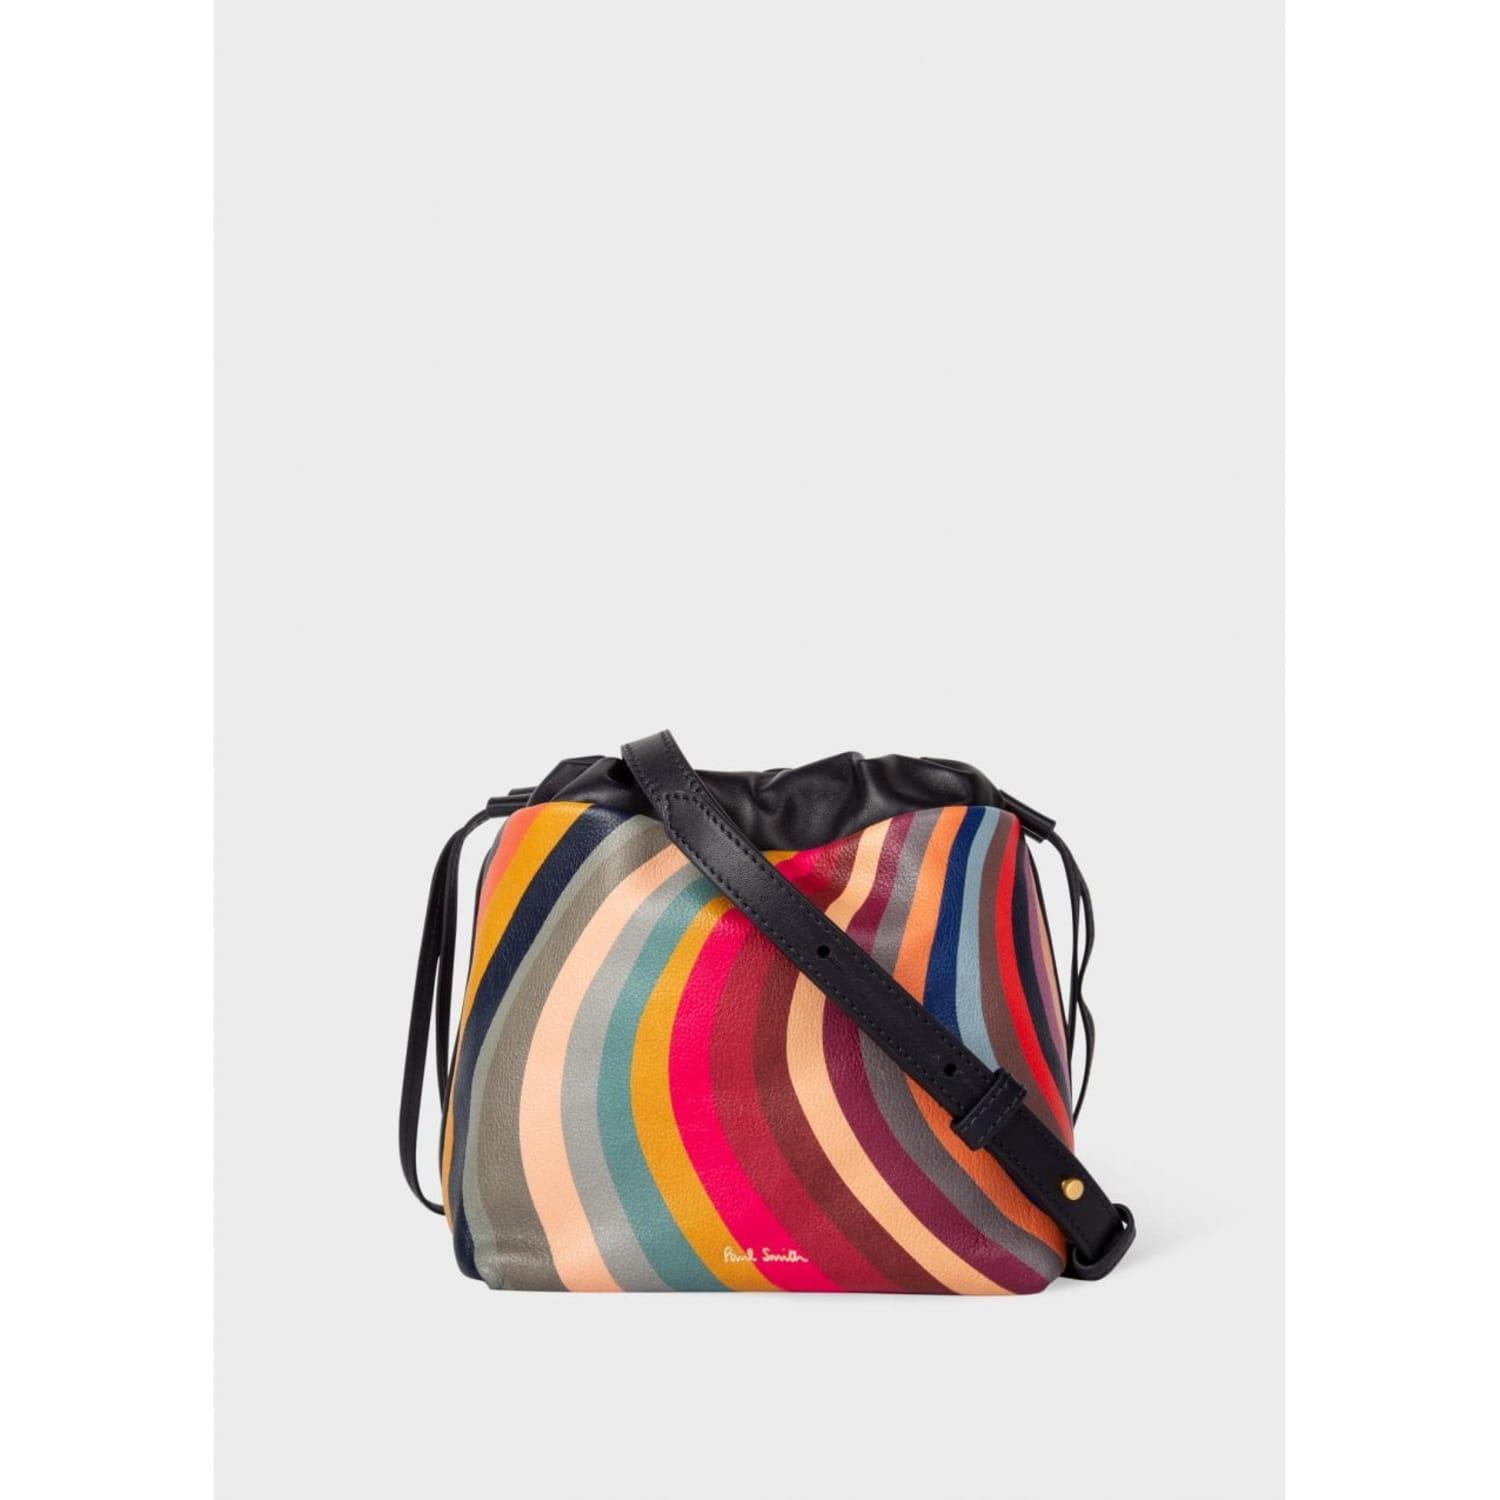 Paul Smith - Leather Swirl Shoulder Bag - Multi